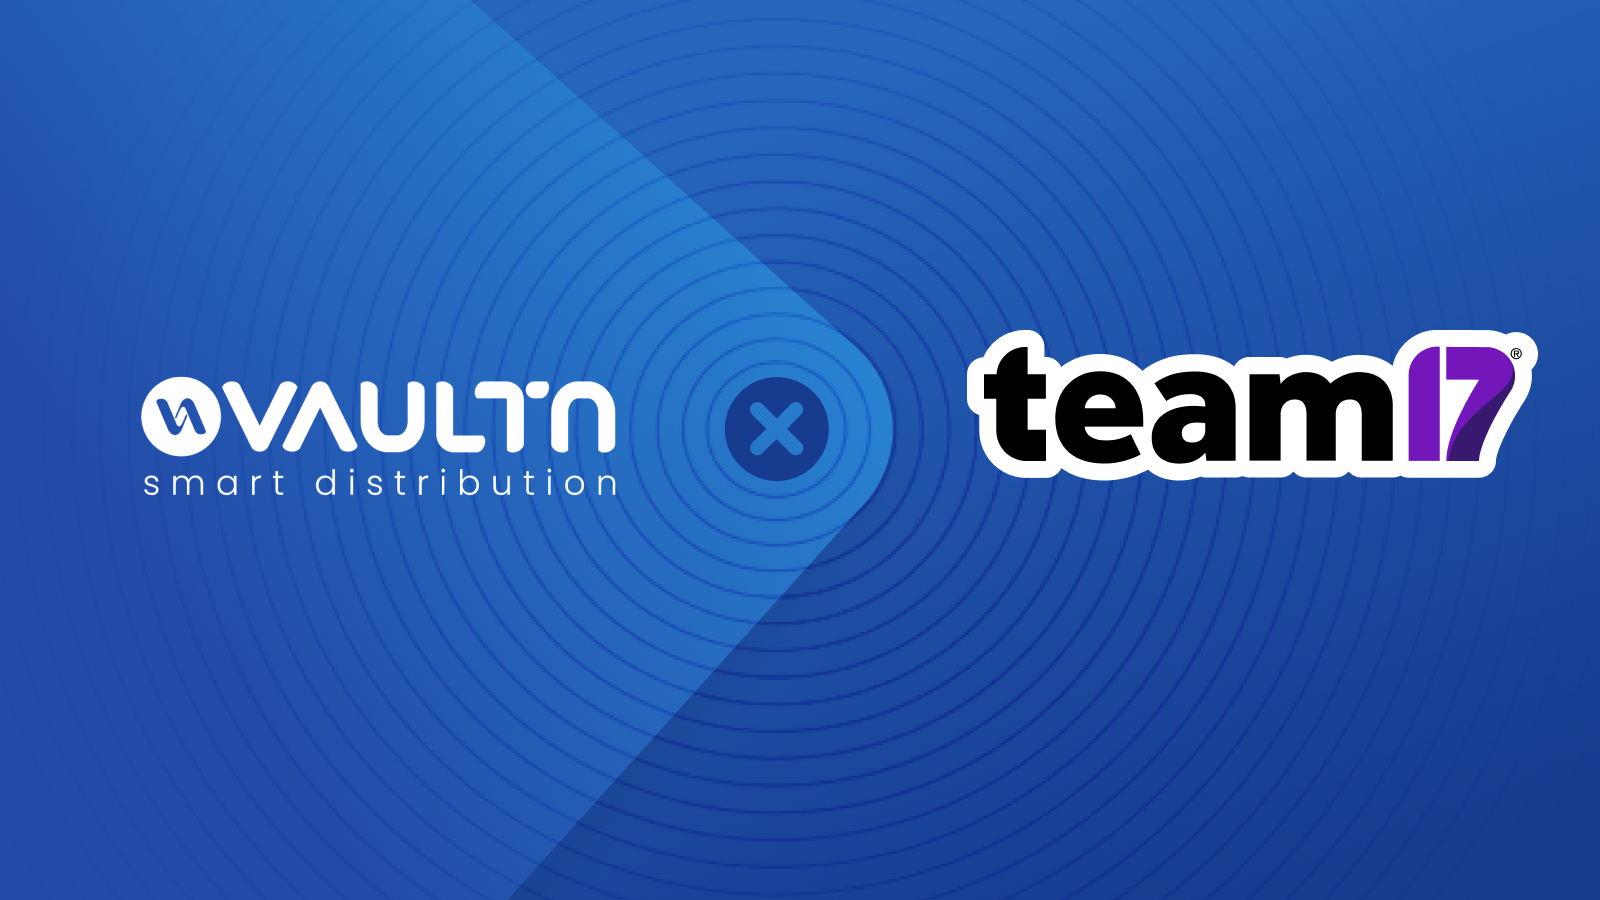 Team17 opts for VaultN.com as technical distribution platform